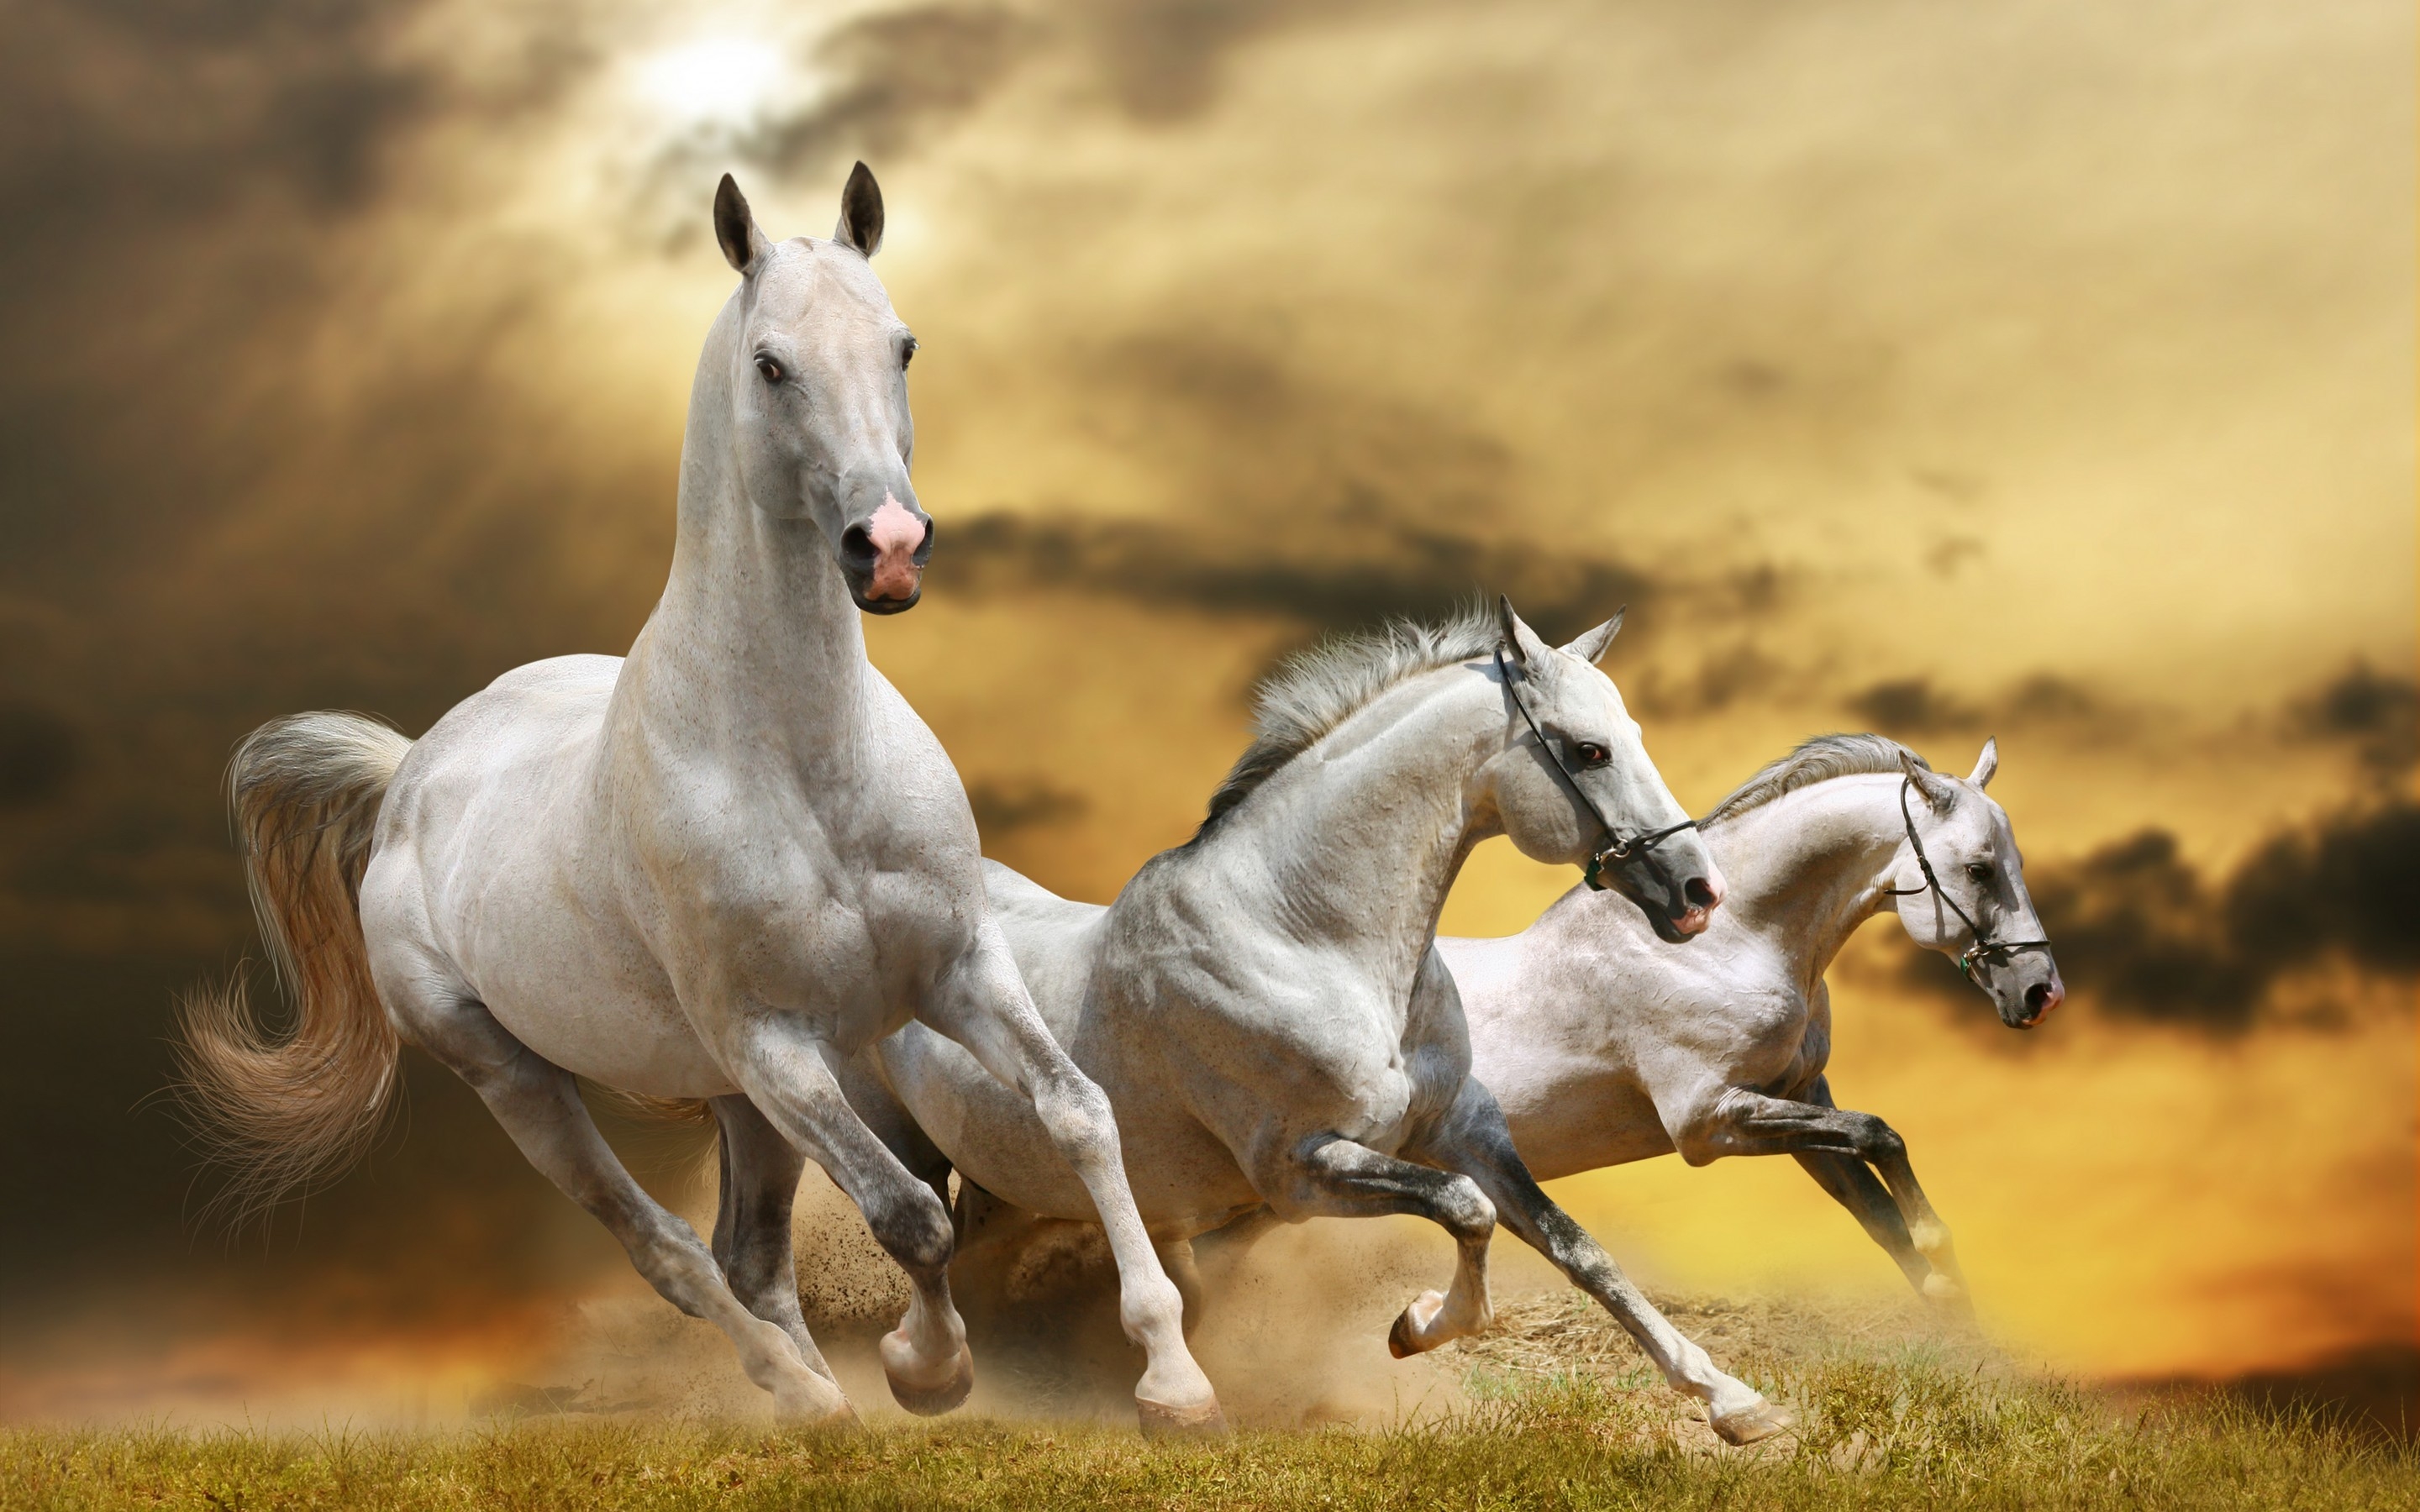 Wilde White Horses for 2880 x 1800 Retina Display resolution